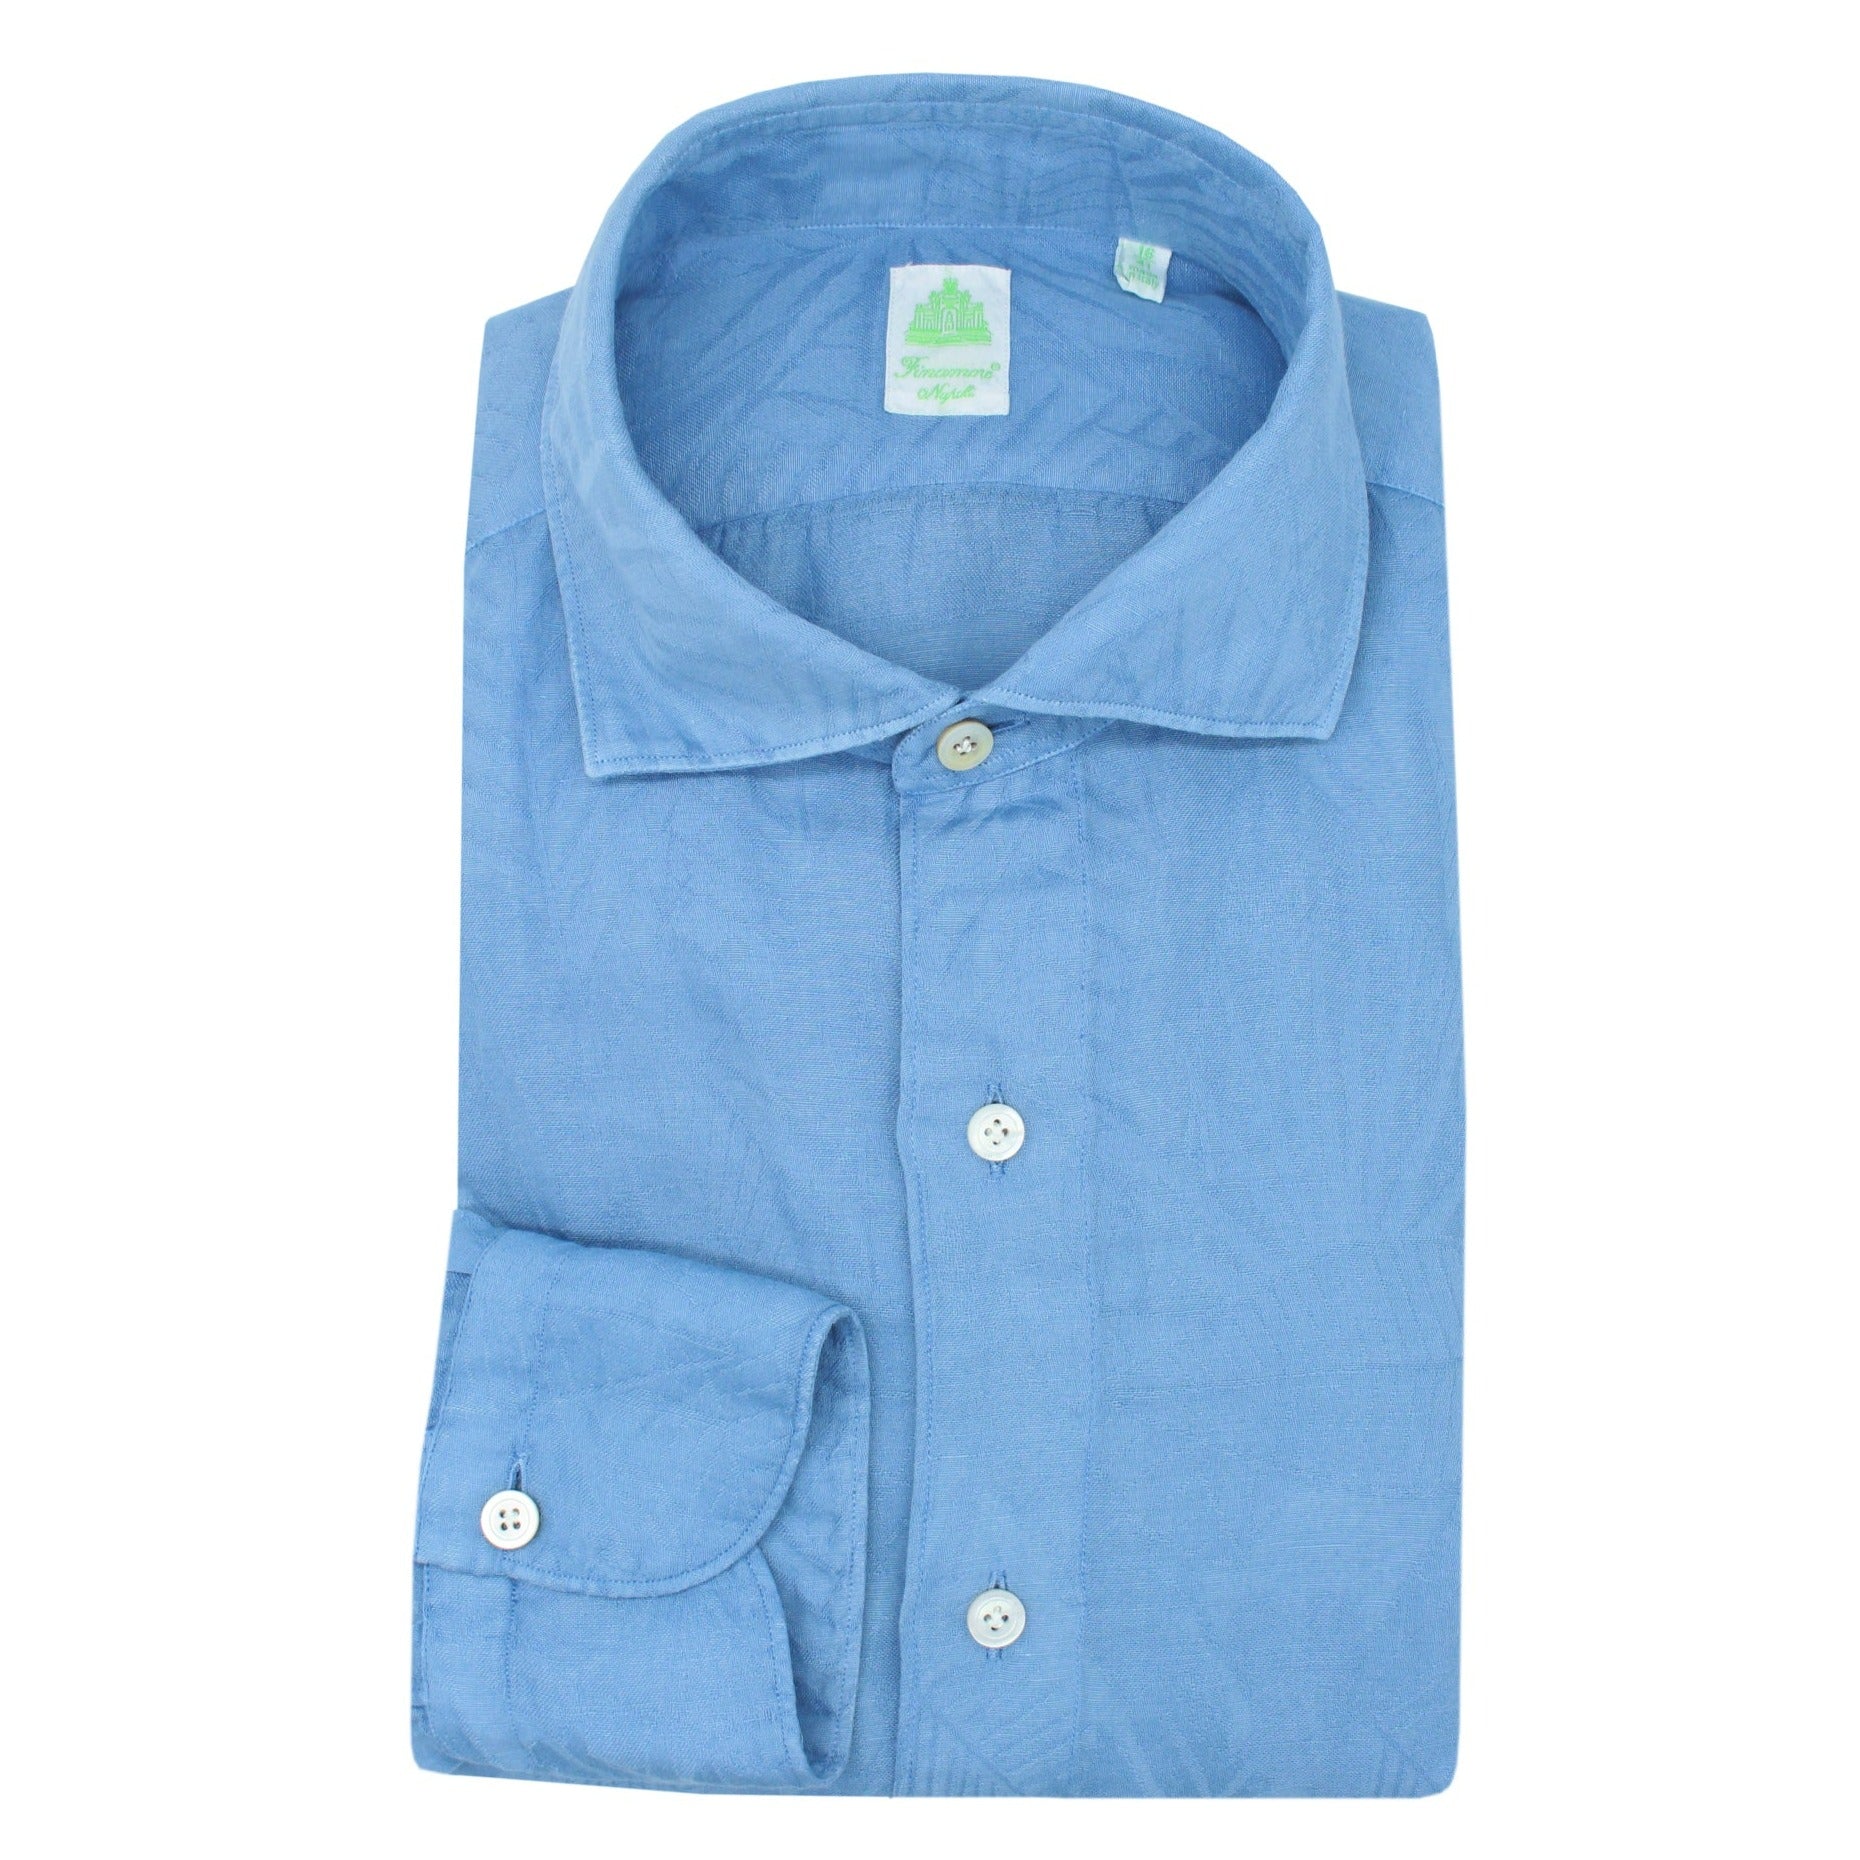 Tokyo slim fit sport shirt in light blue linen garment dyed